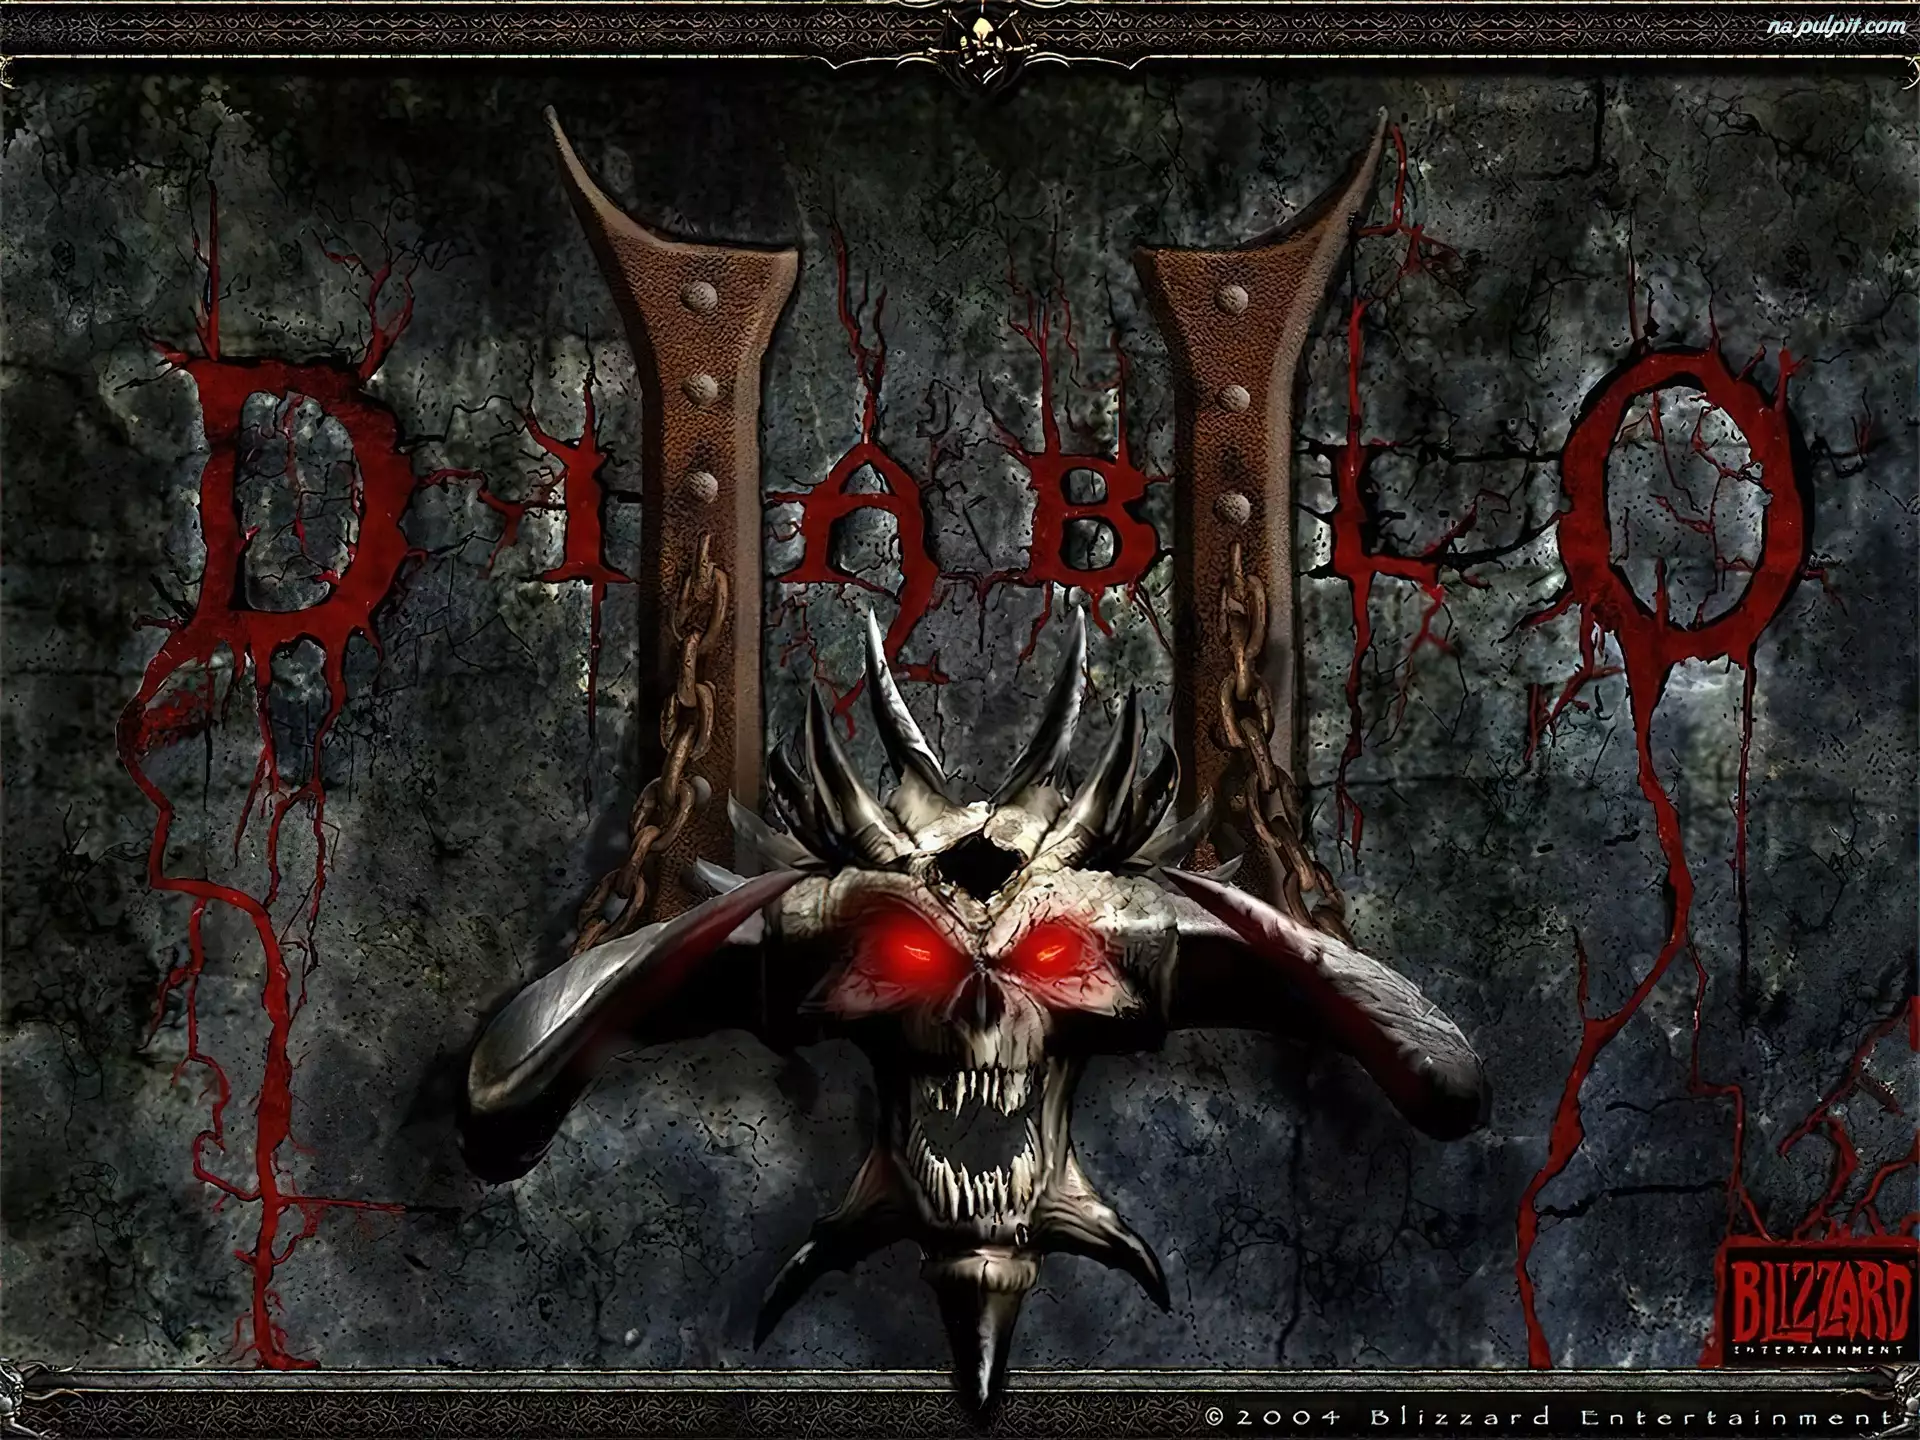 Diablo 2 download the last version for windows